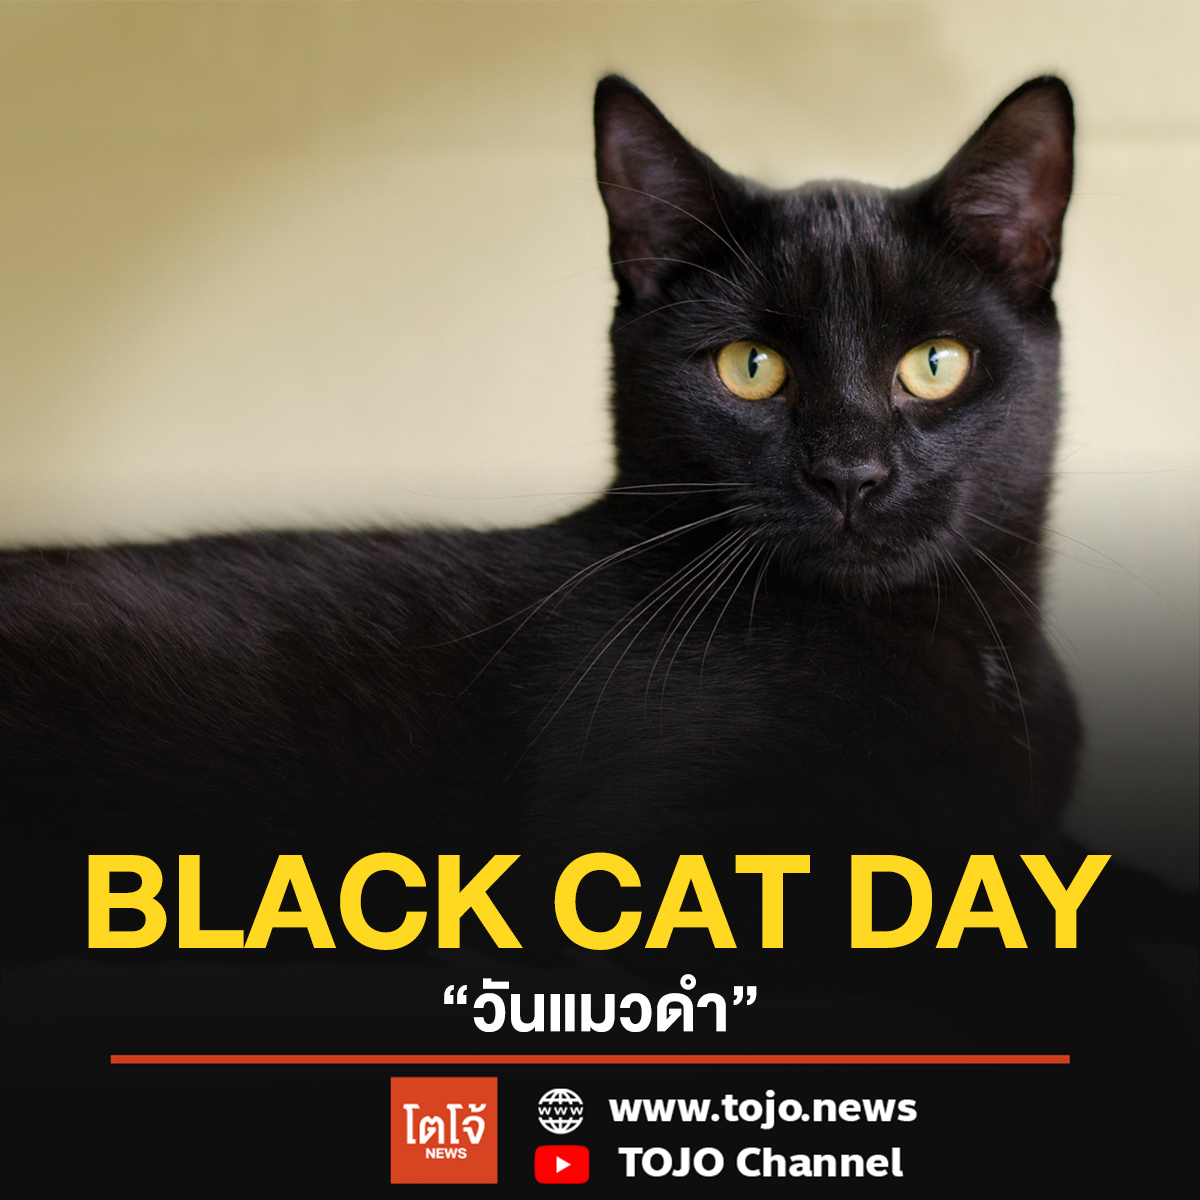 Black Cat Day หรือวันแมวดำ TOJO News